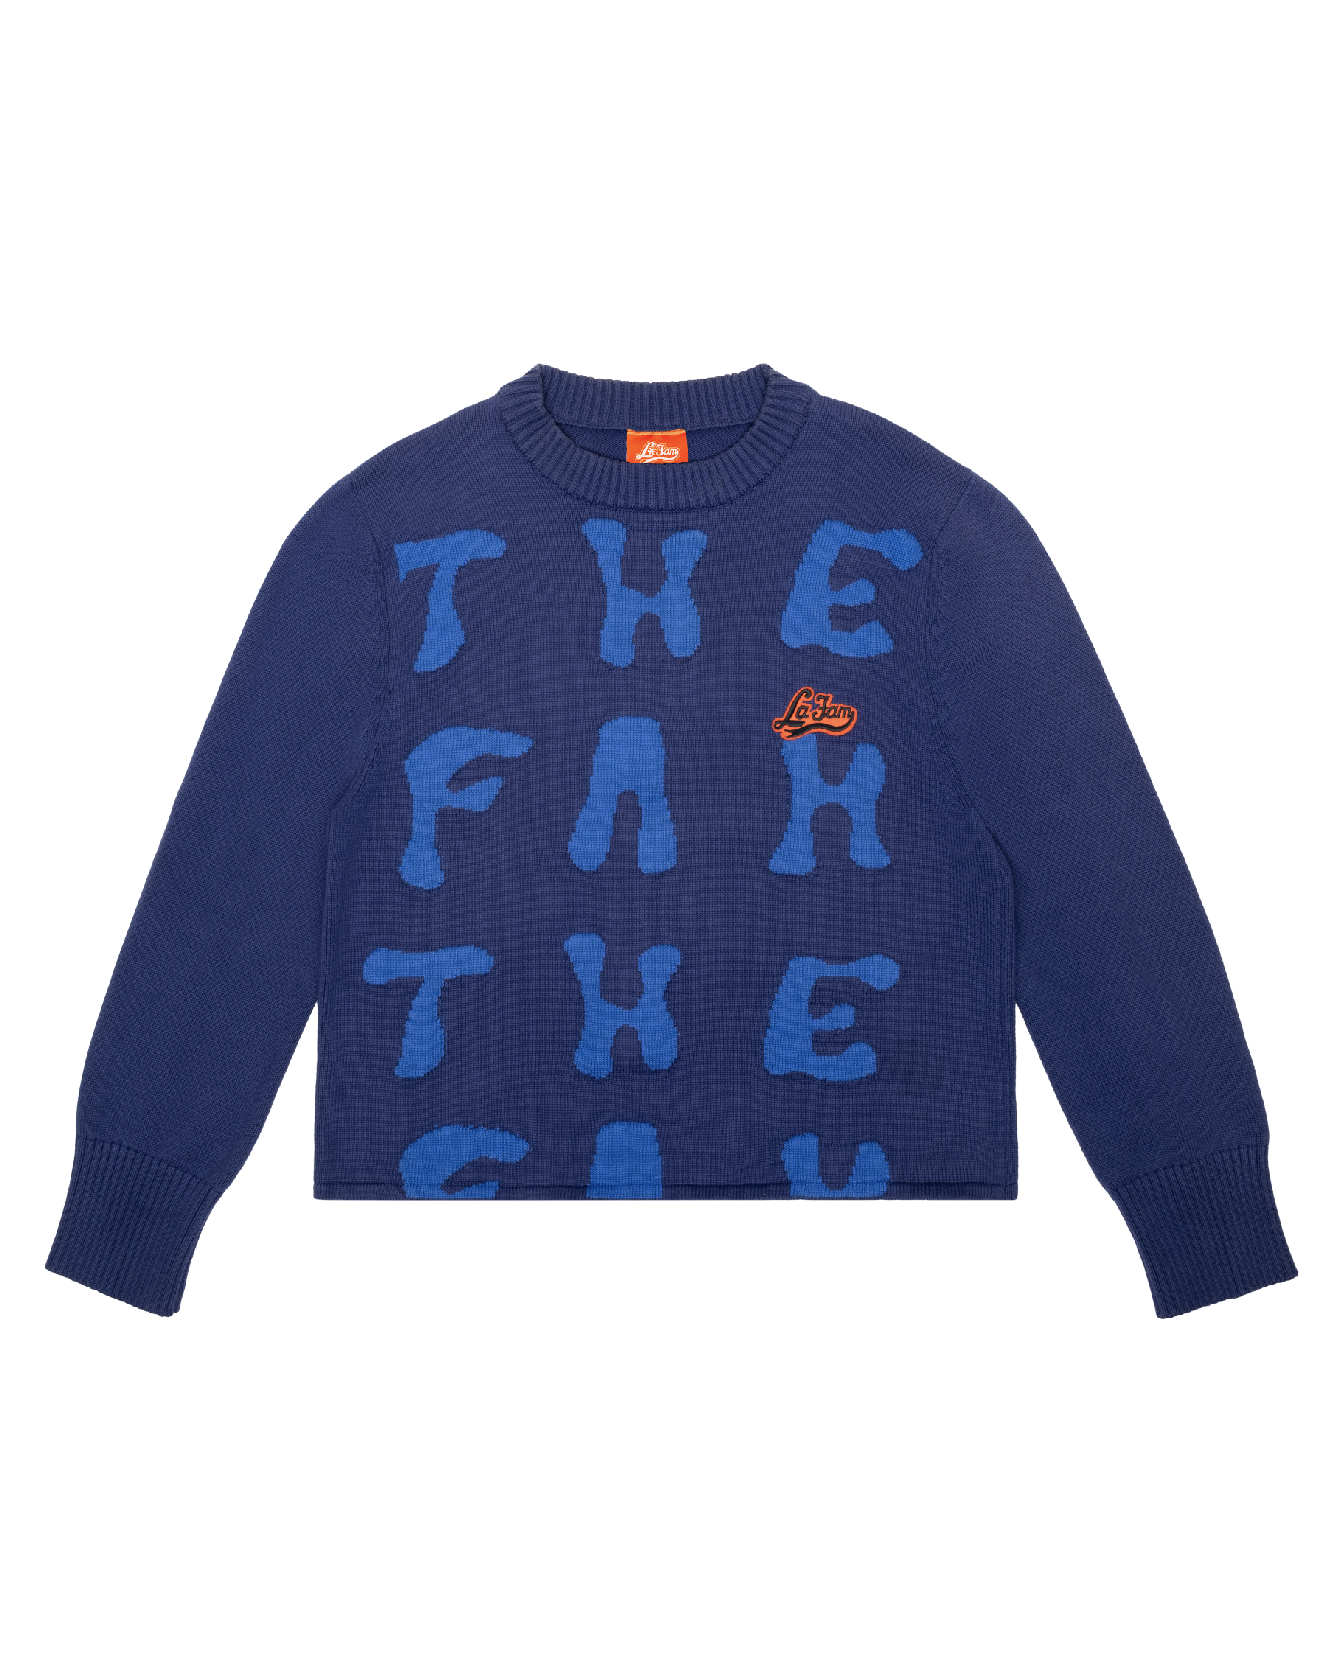 THE FAM knit blue